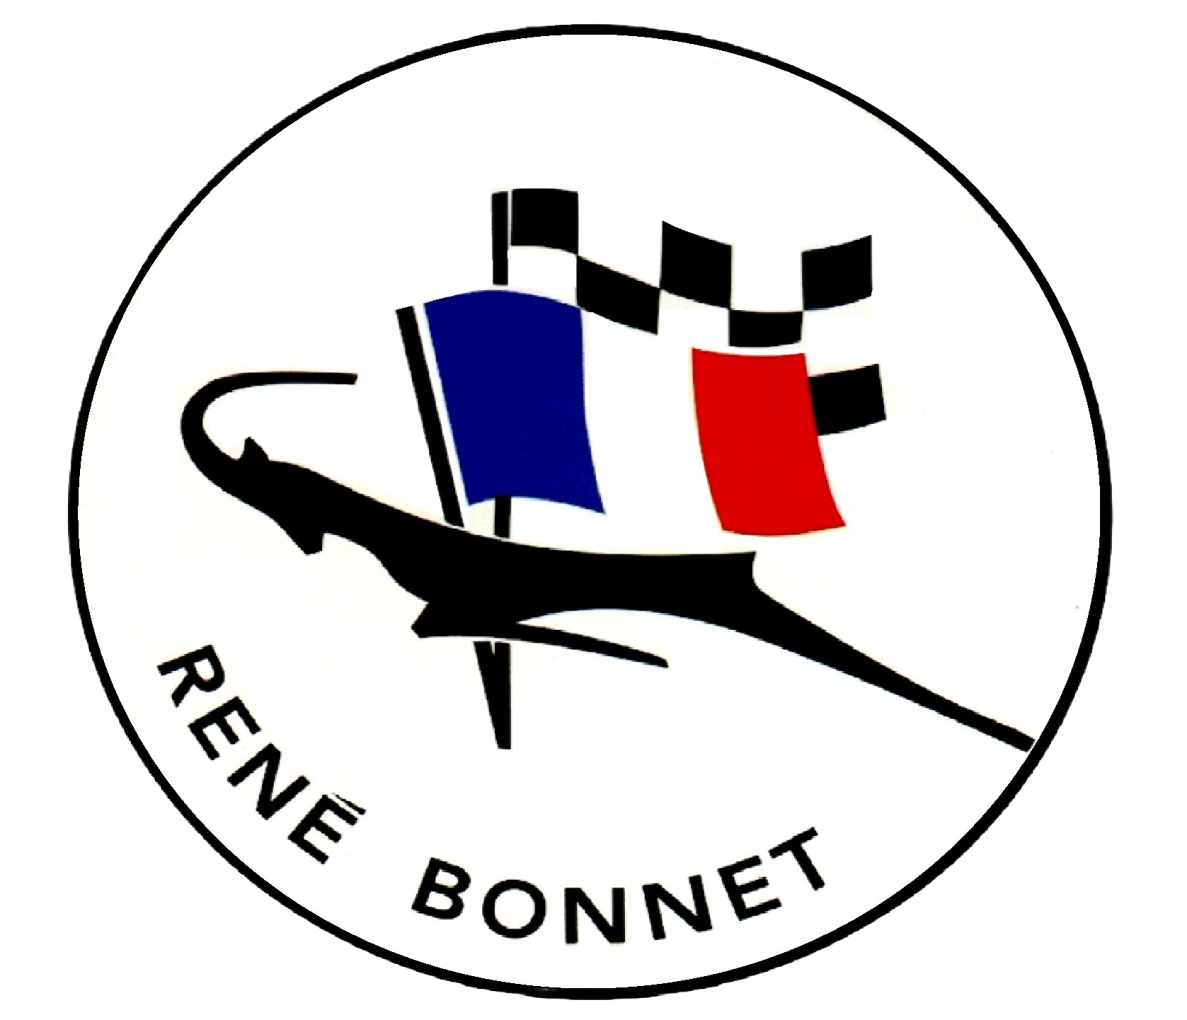 Rene Bonnet